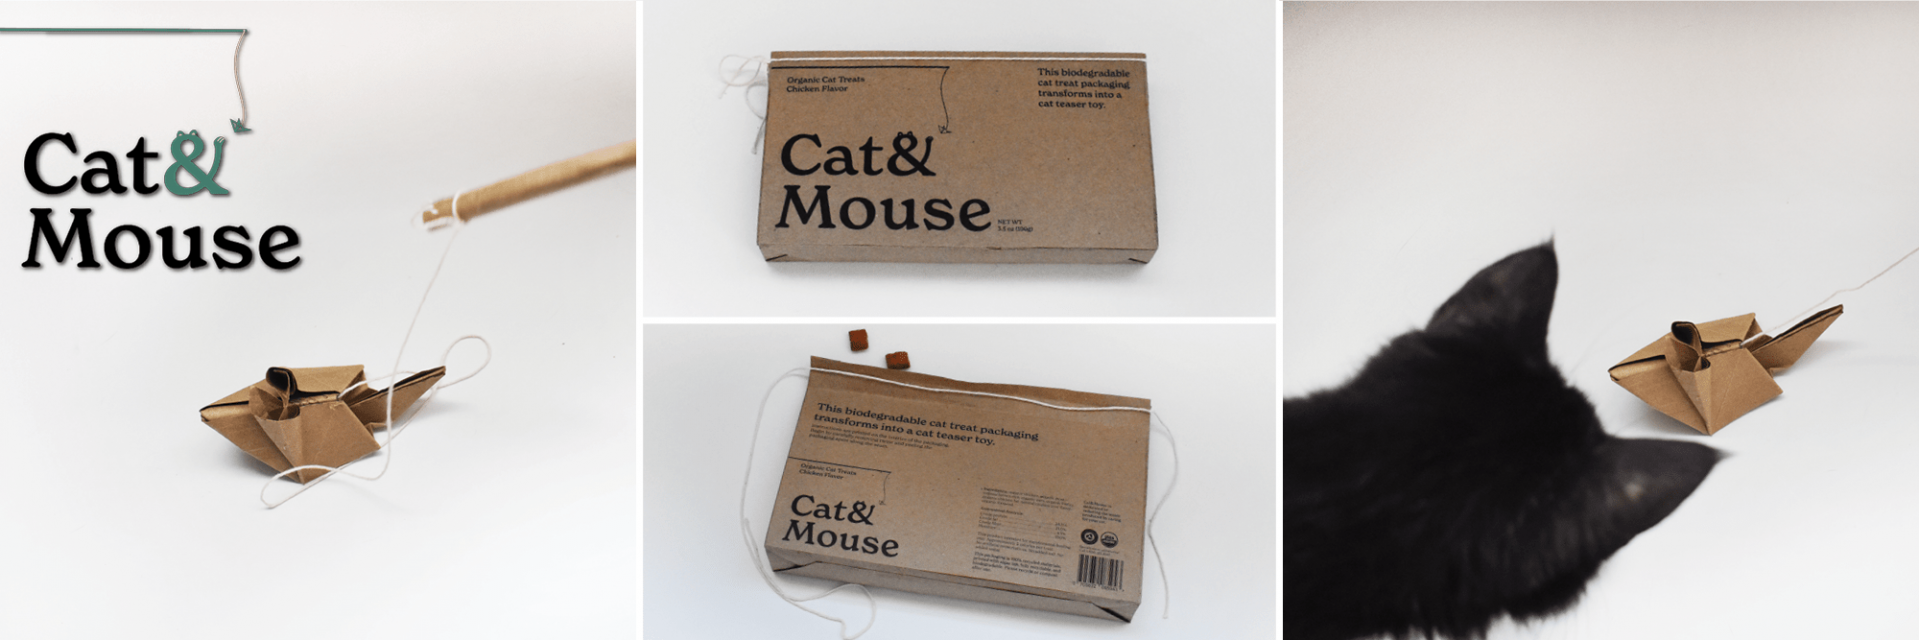 Cat&Mouse